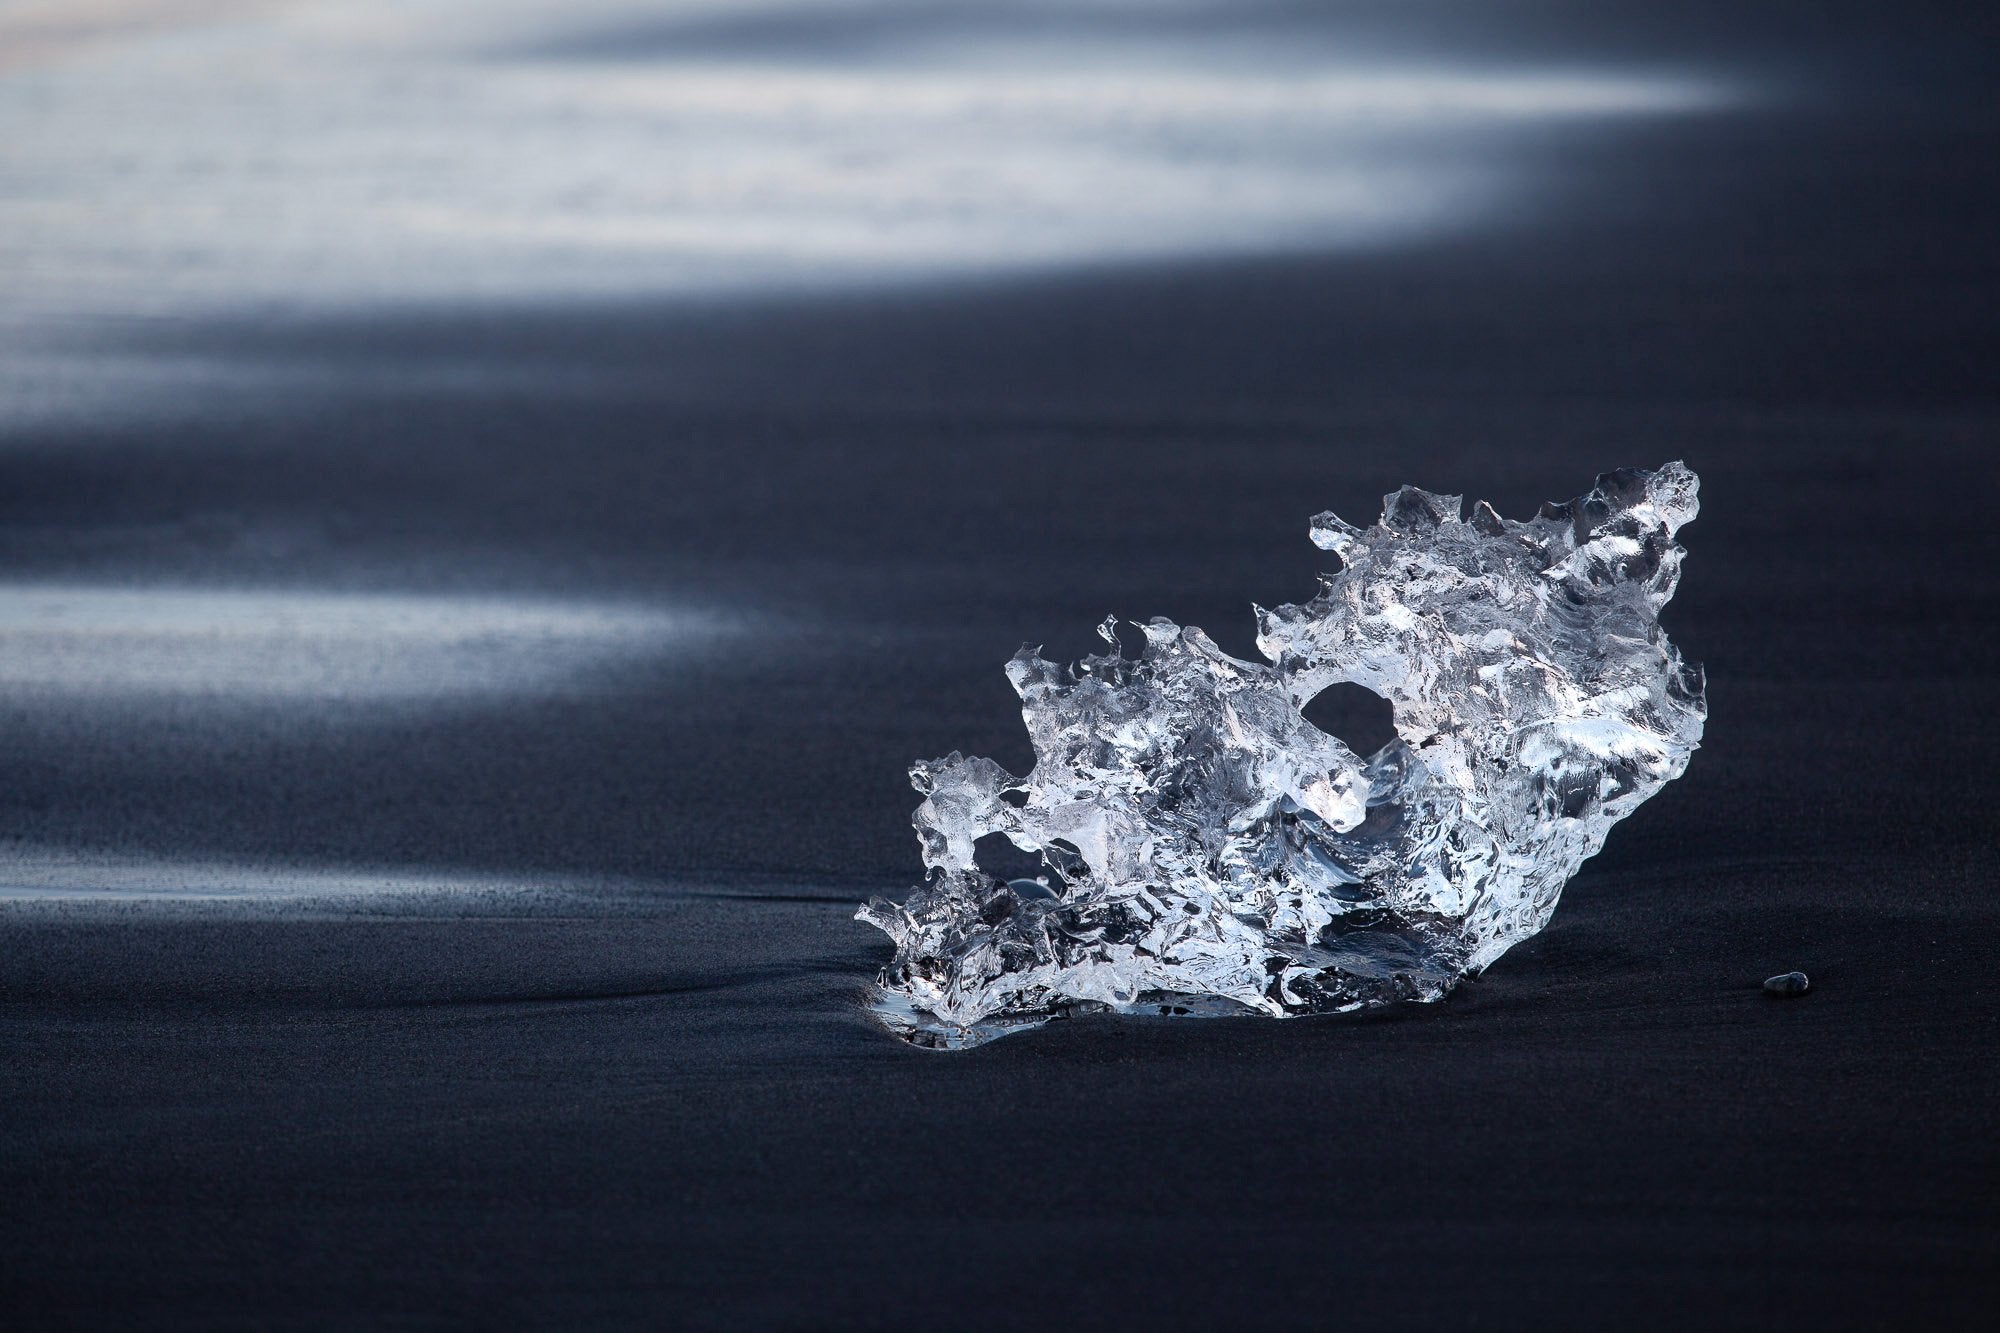 A crystalline ice stone, Iceland #25